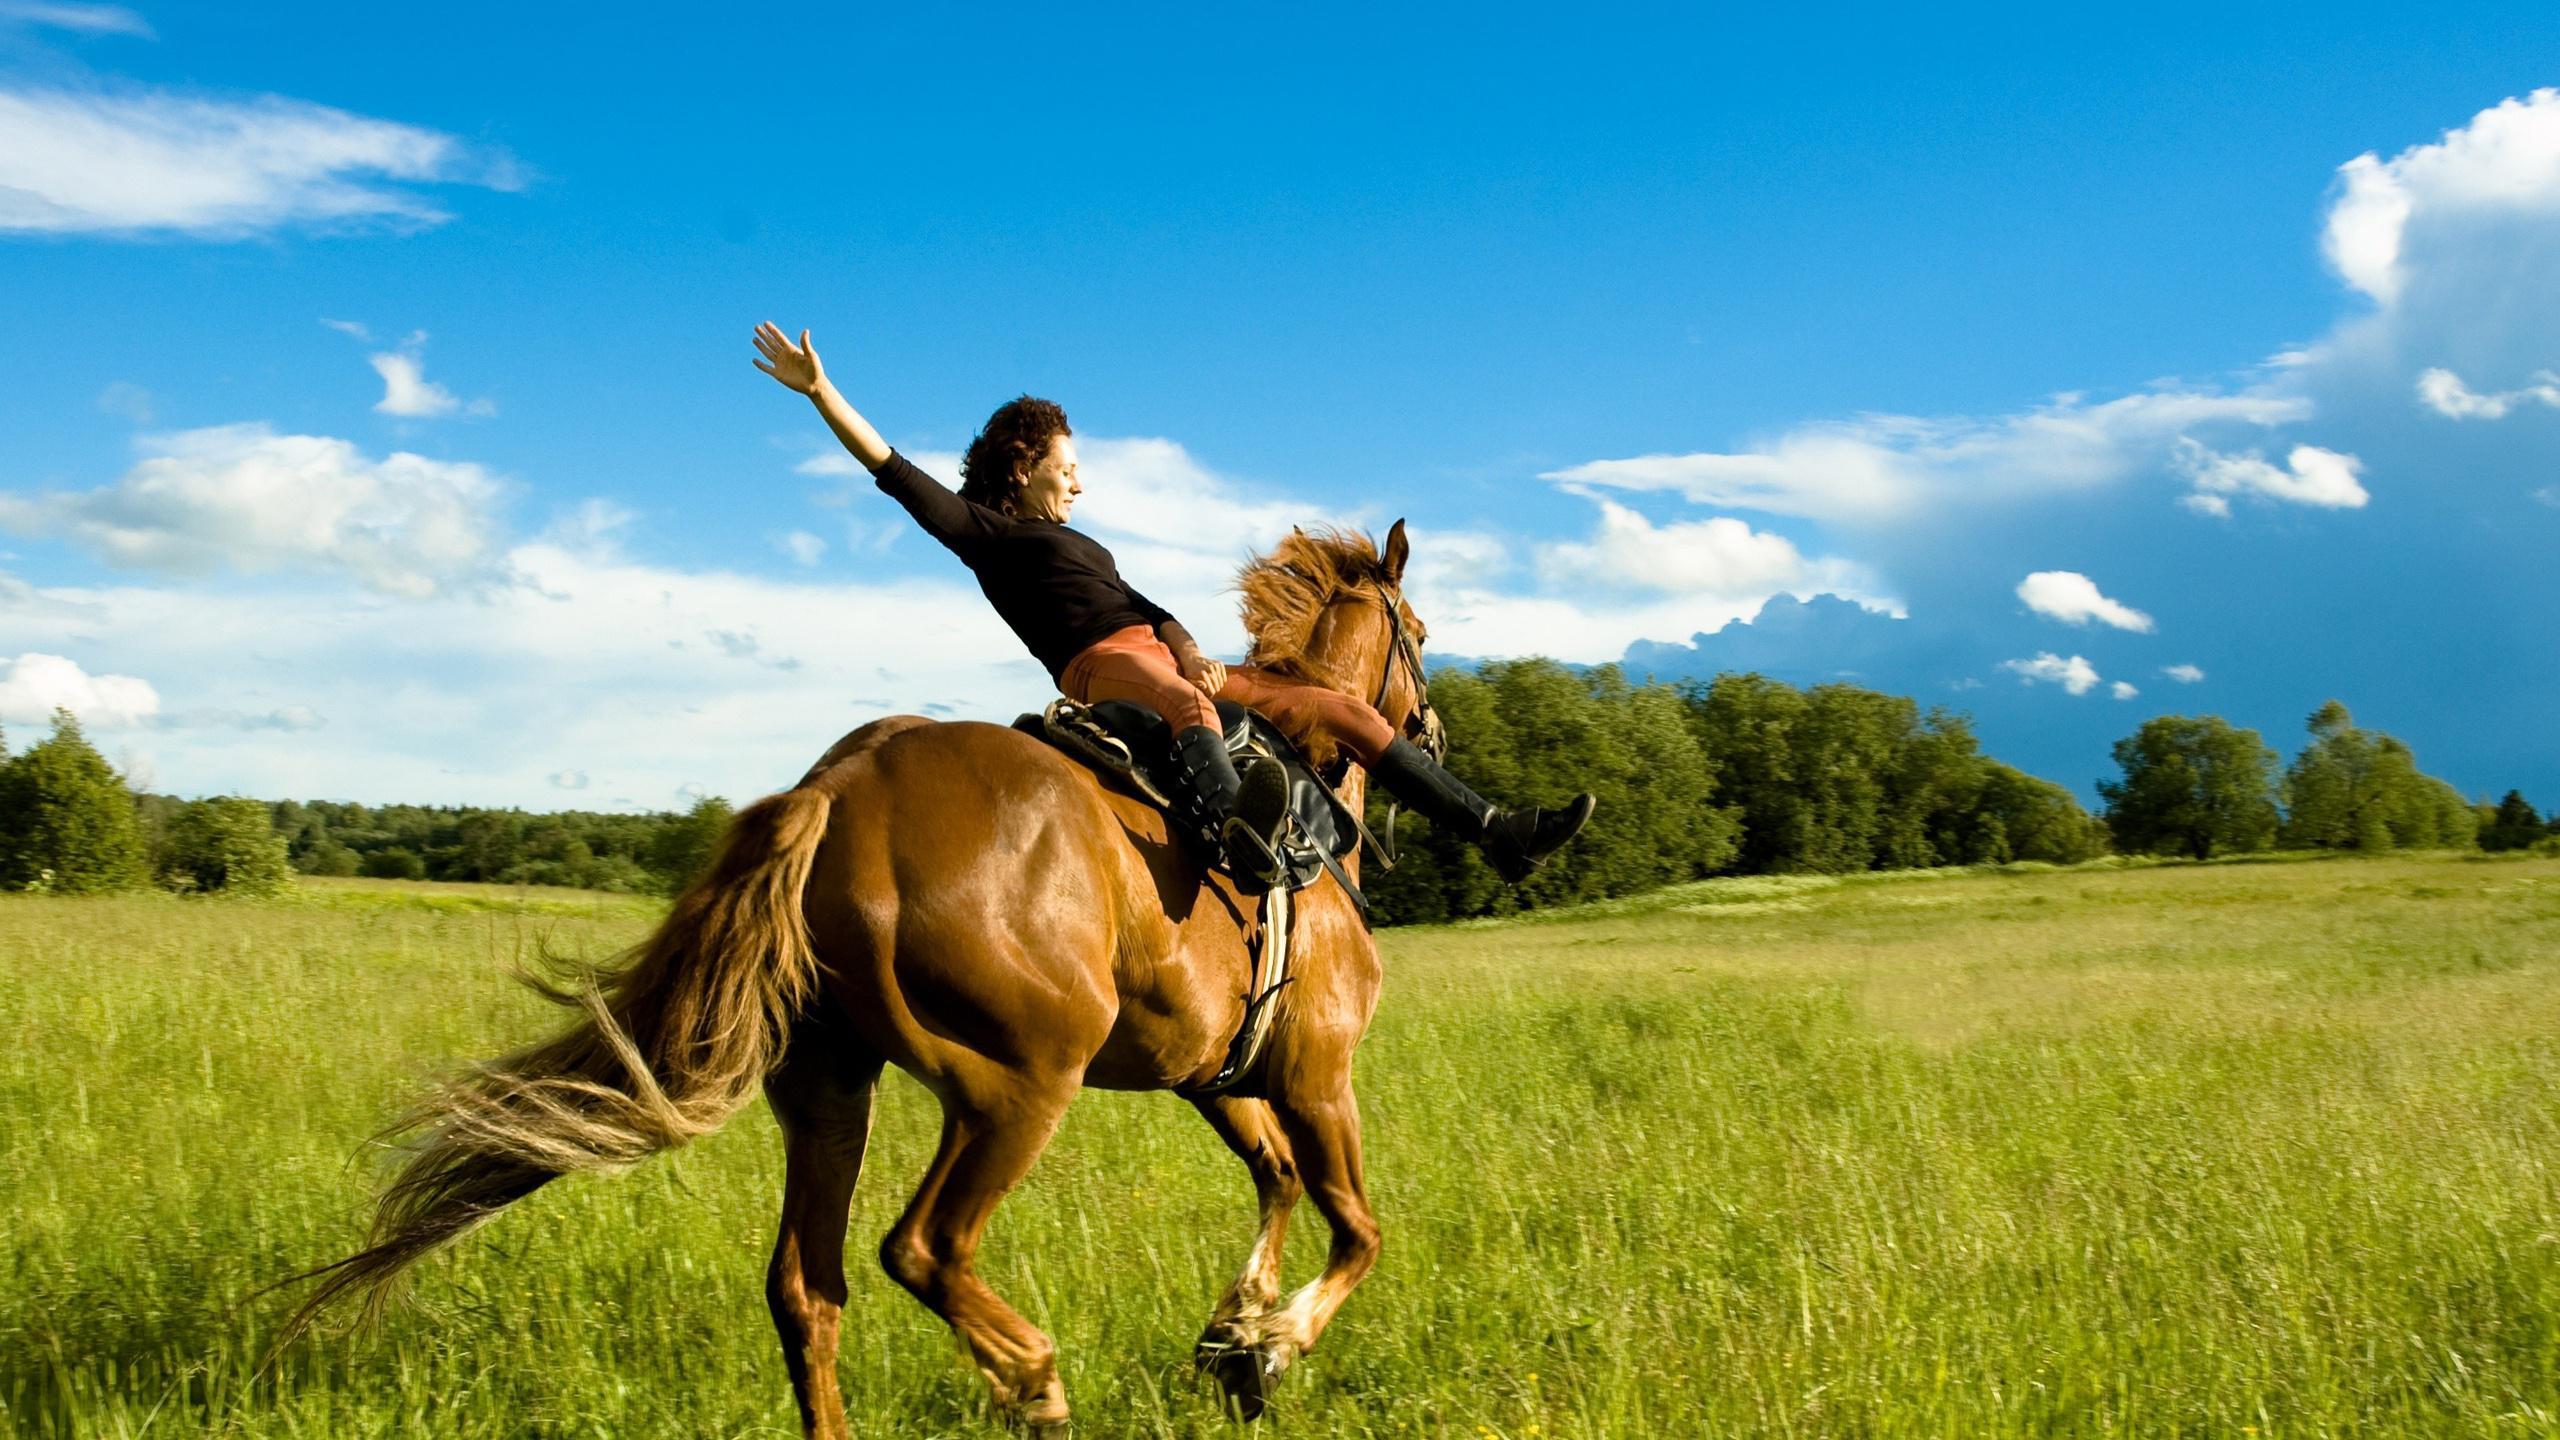 2560x1440px Horse Riding (431.7 KB).09.2015